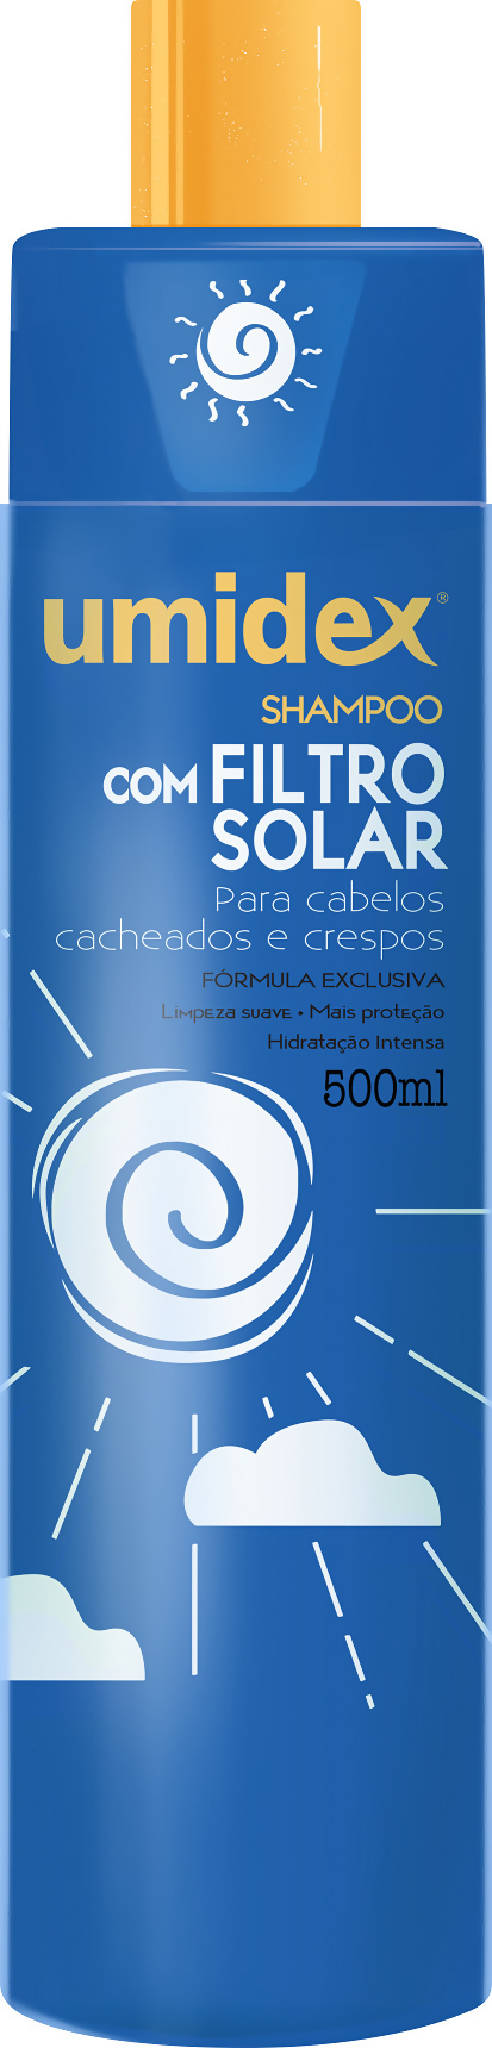 Shampoo Umidex Filtro Solar 500ml